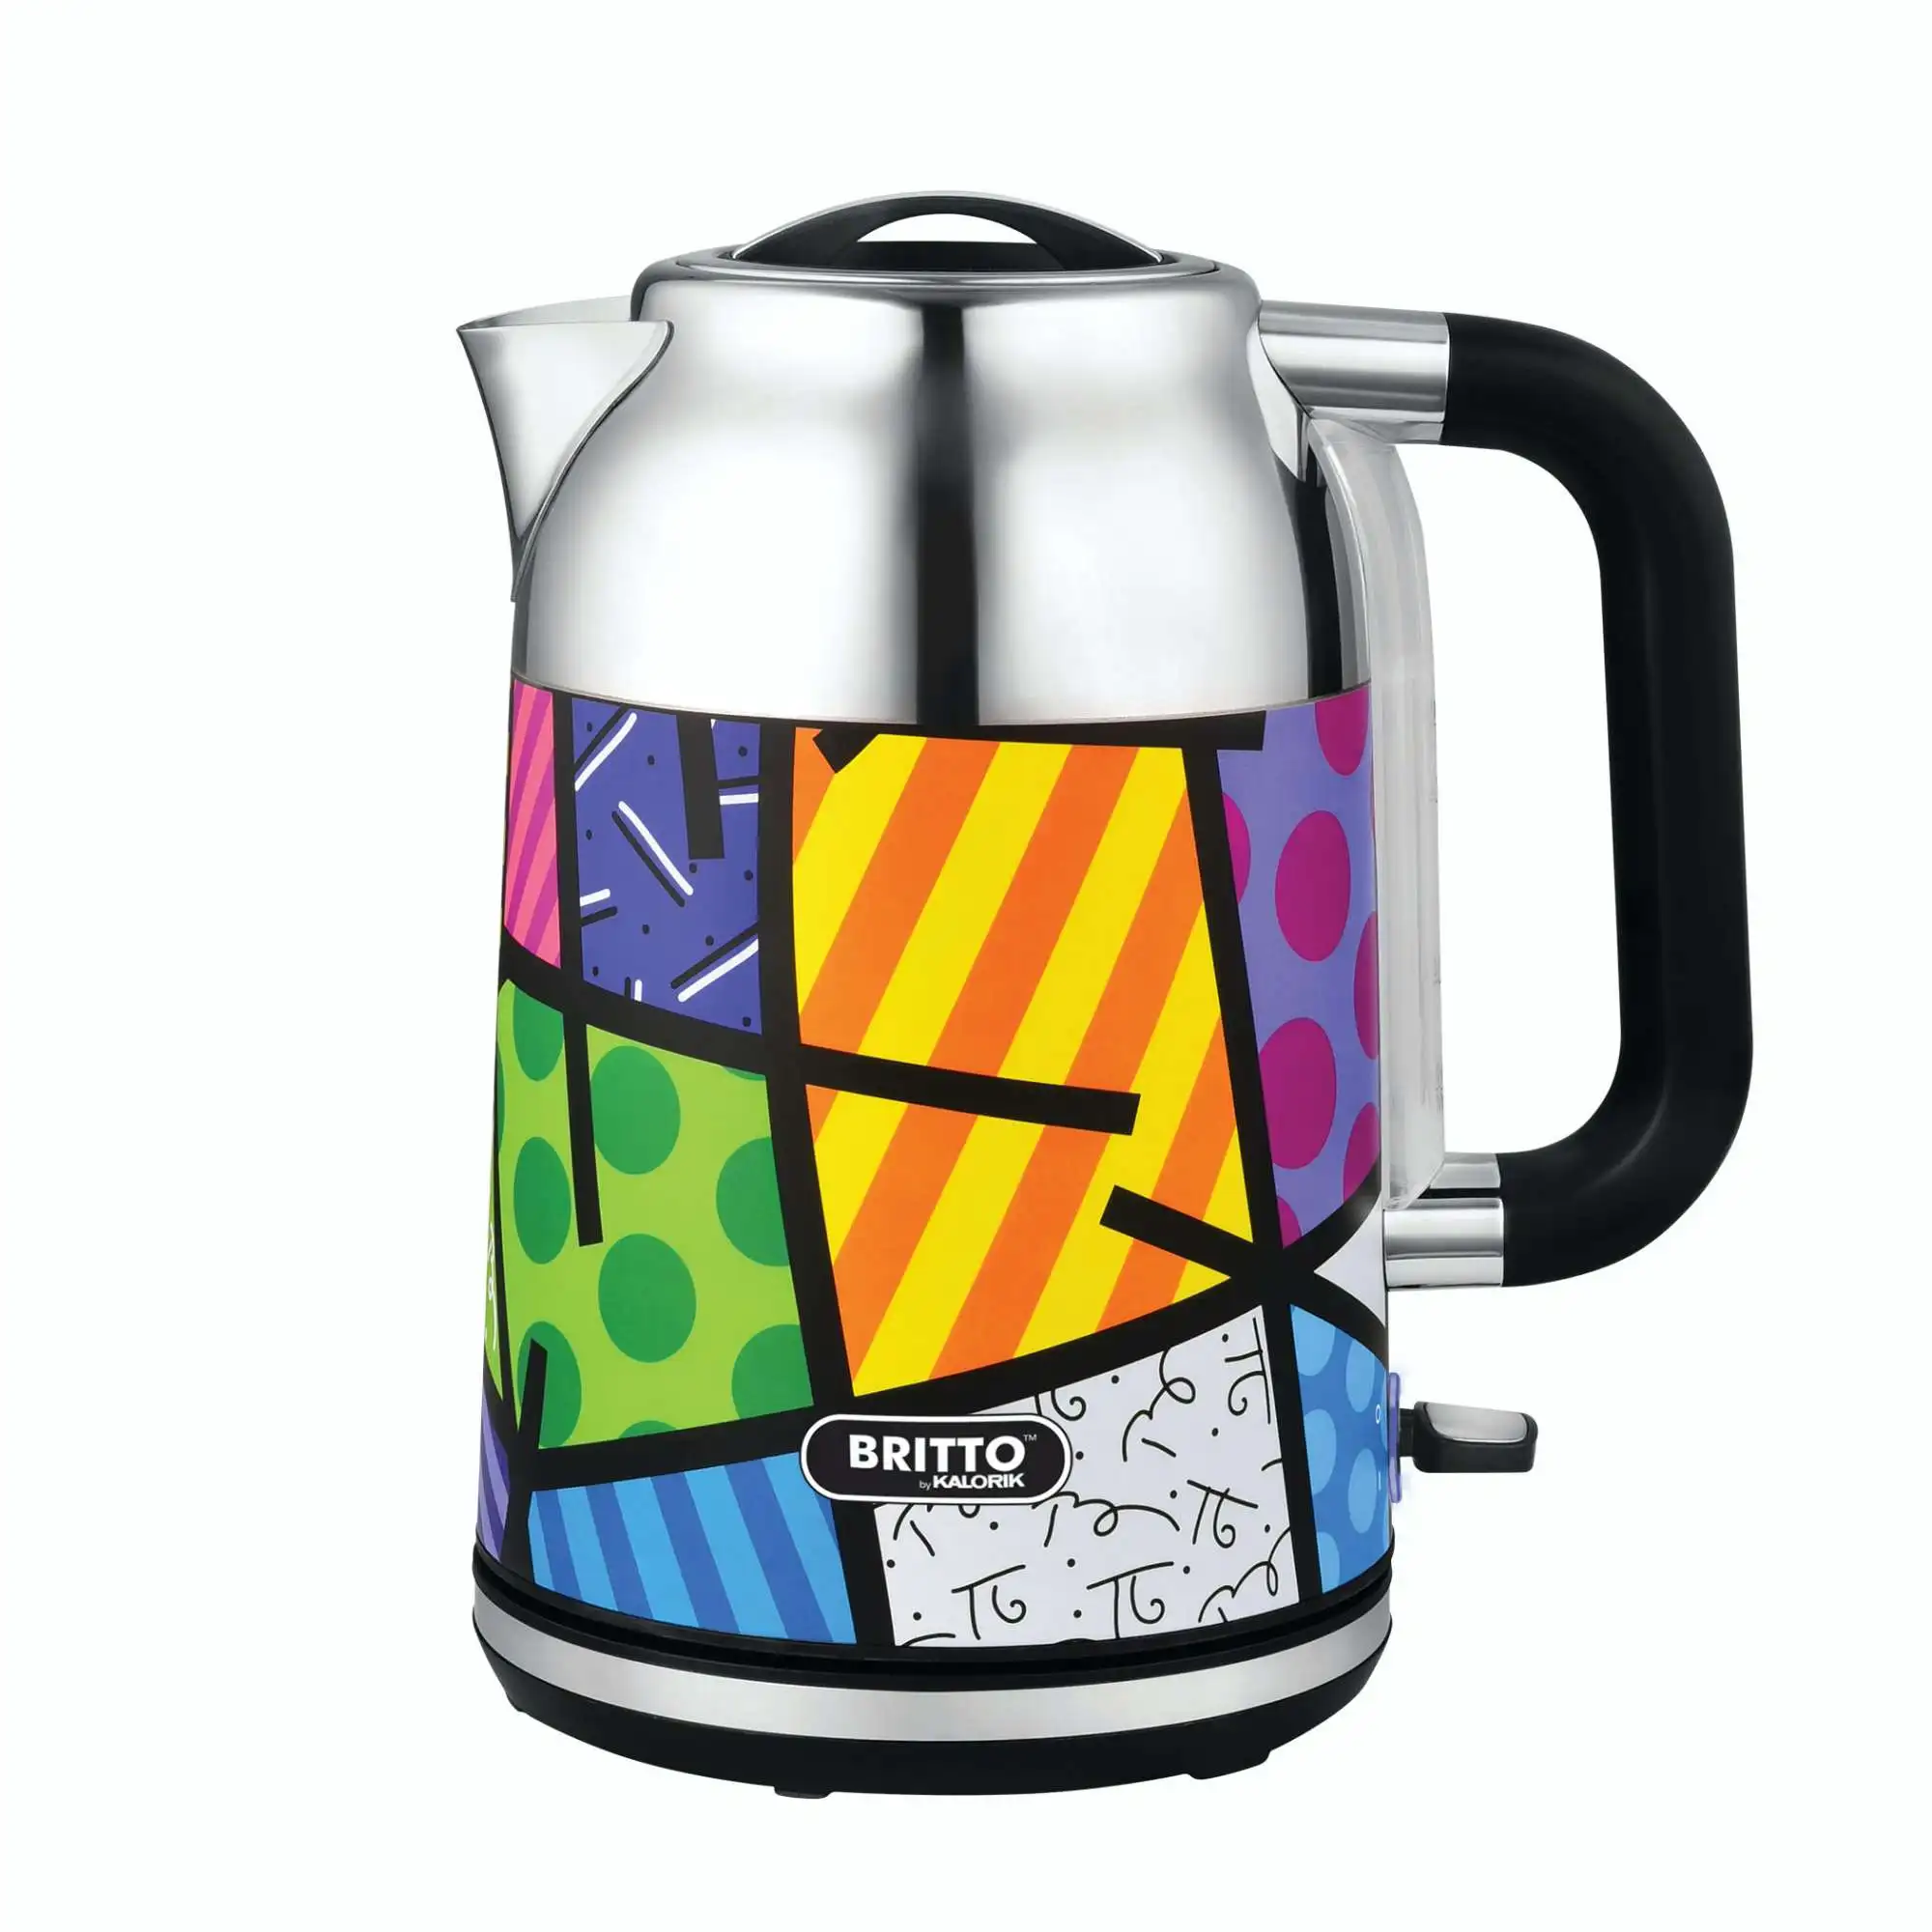 Kettle Multi Color Design portable water boiler Teapot For Home